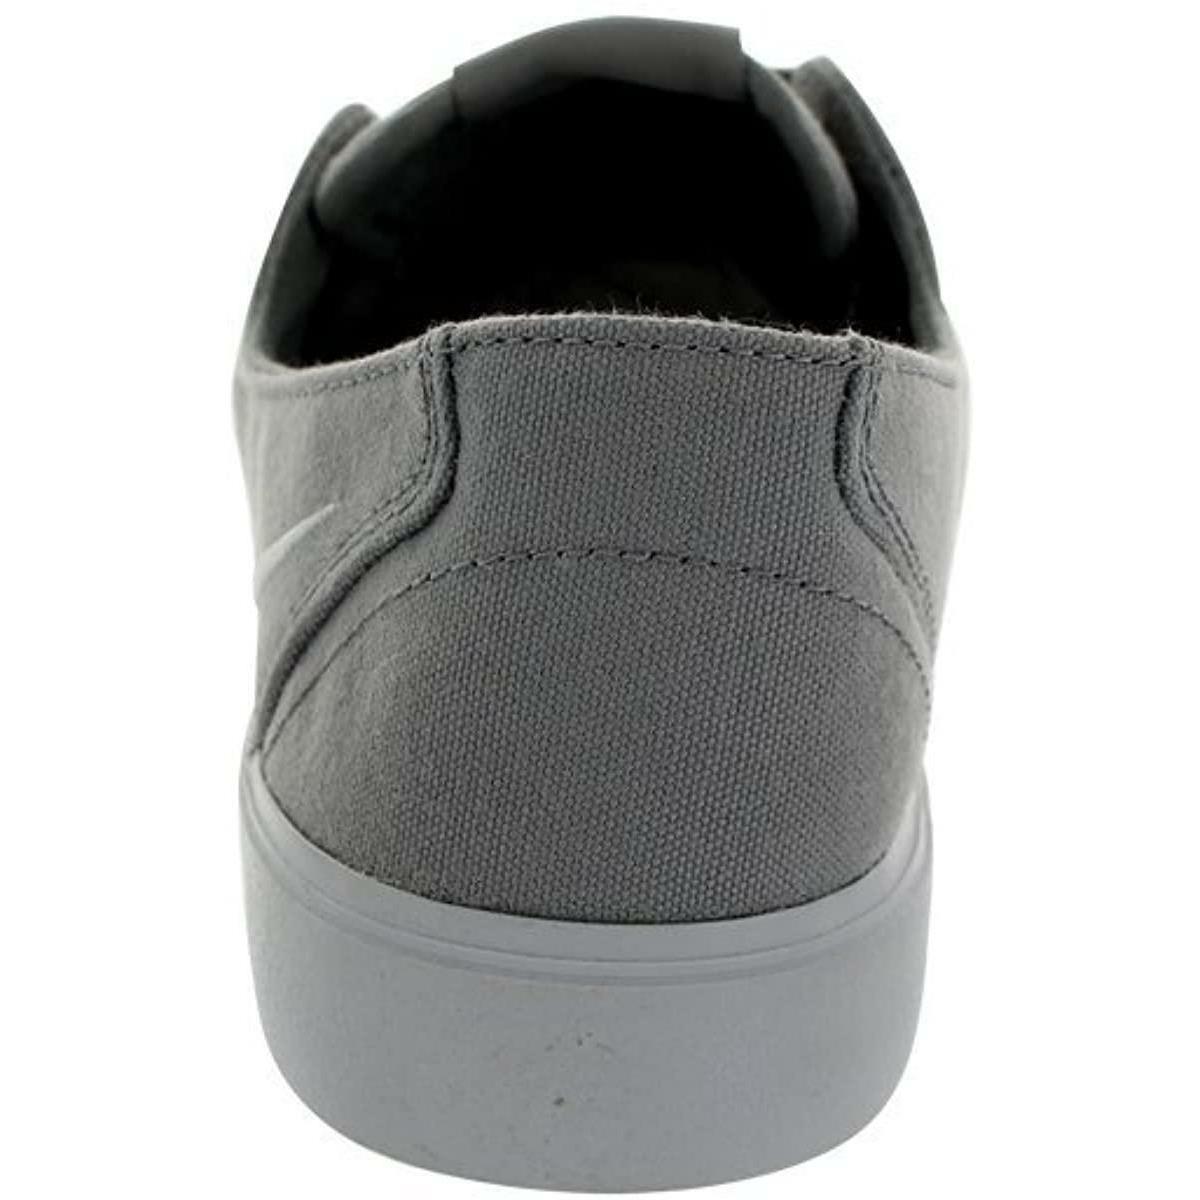 Nike shoes Braata Canvas - Gray 2